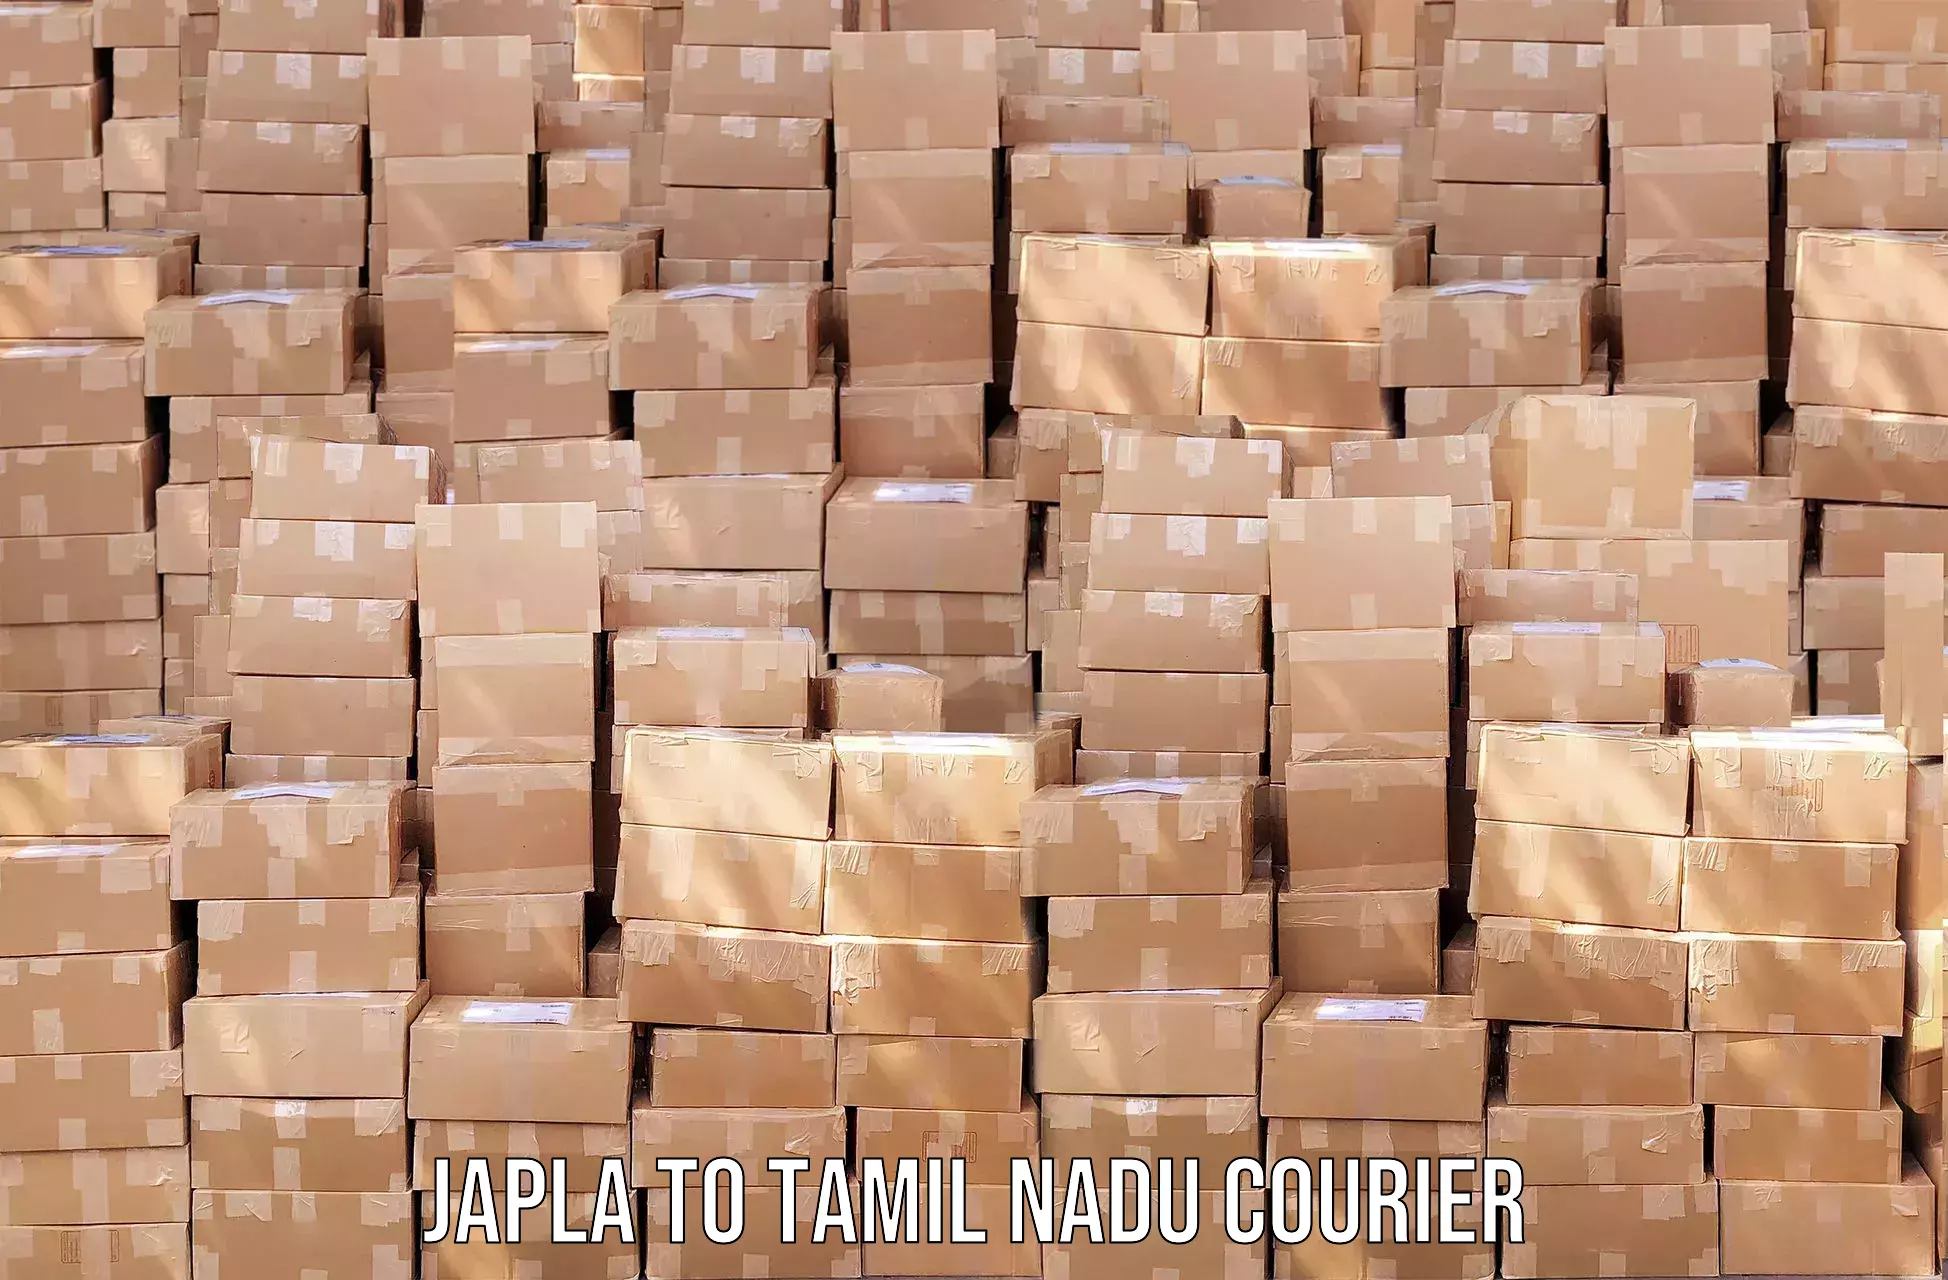 High-speed parcel service Japla to Tamil Nadu